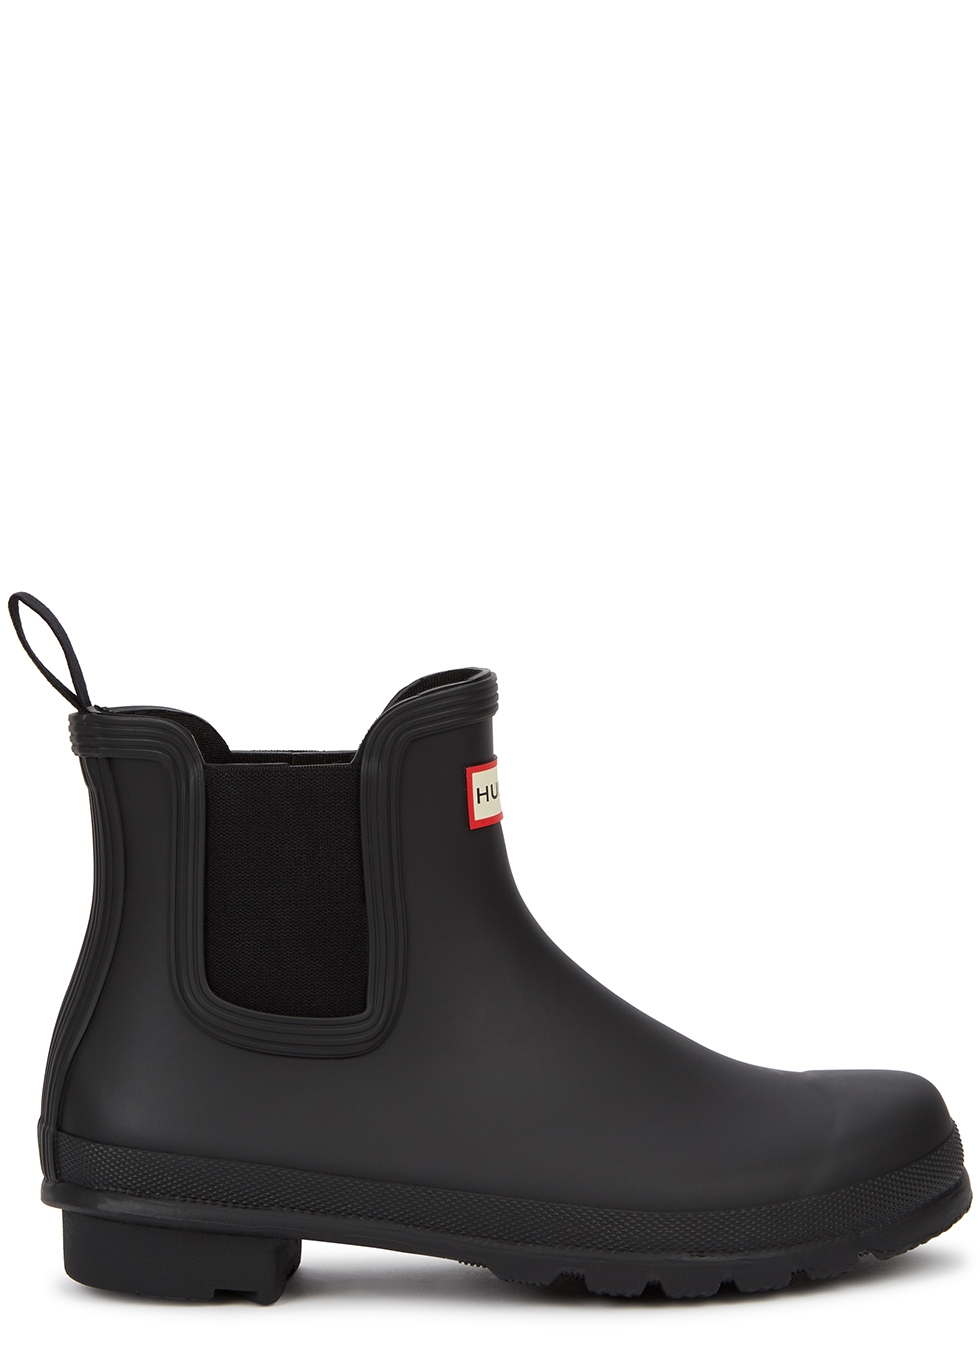 HUNTER Original black rubber Chelsea boots - Harvey Nichols